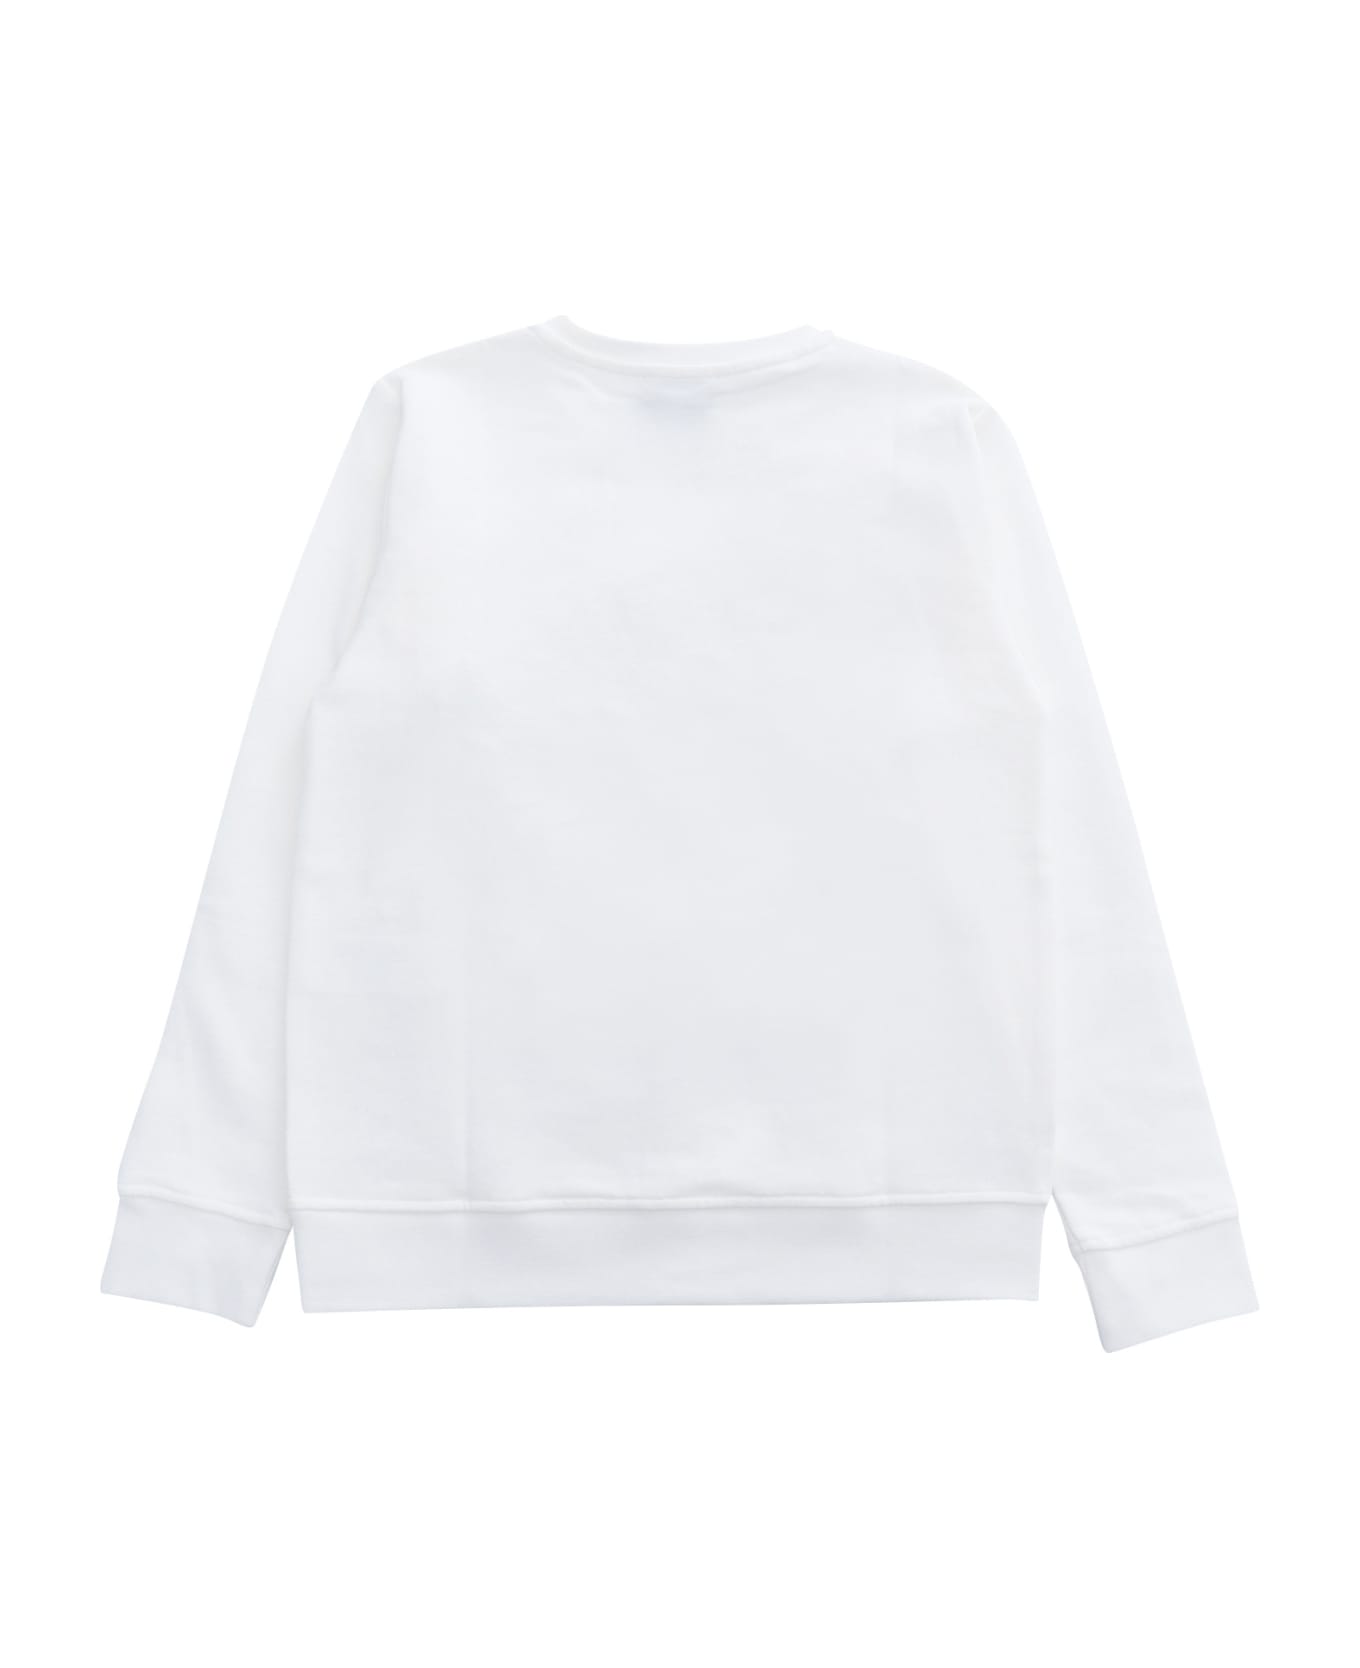 Stella McCartney Kids White Sweatshirt With Print - WHITE ニットウェア＆スウェットシャツ